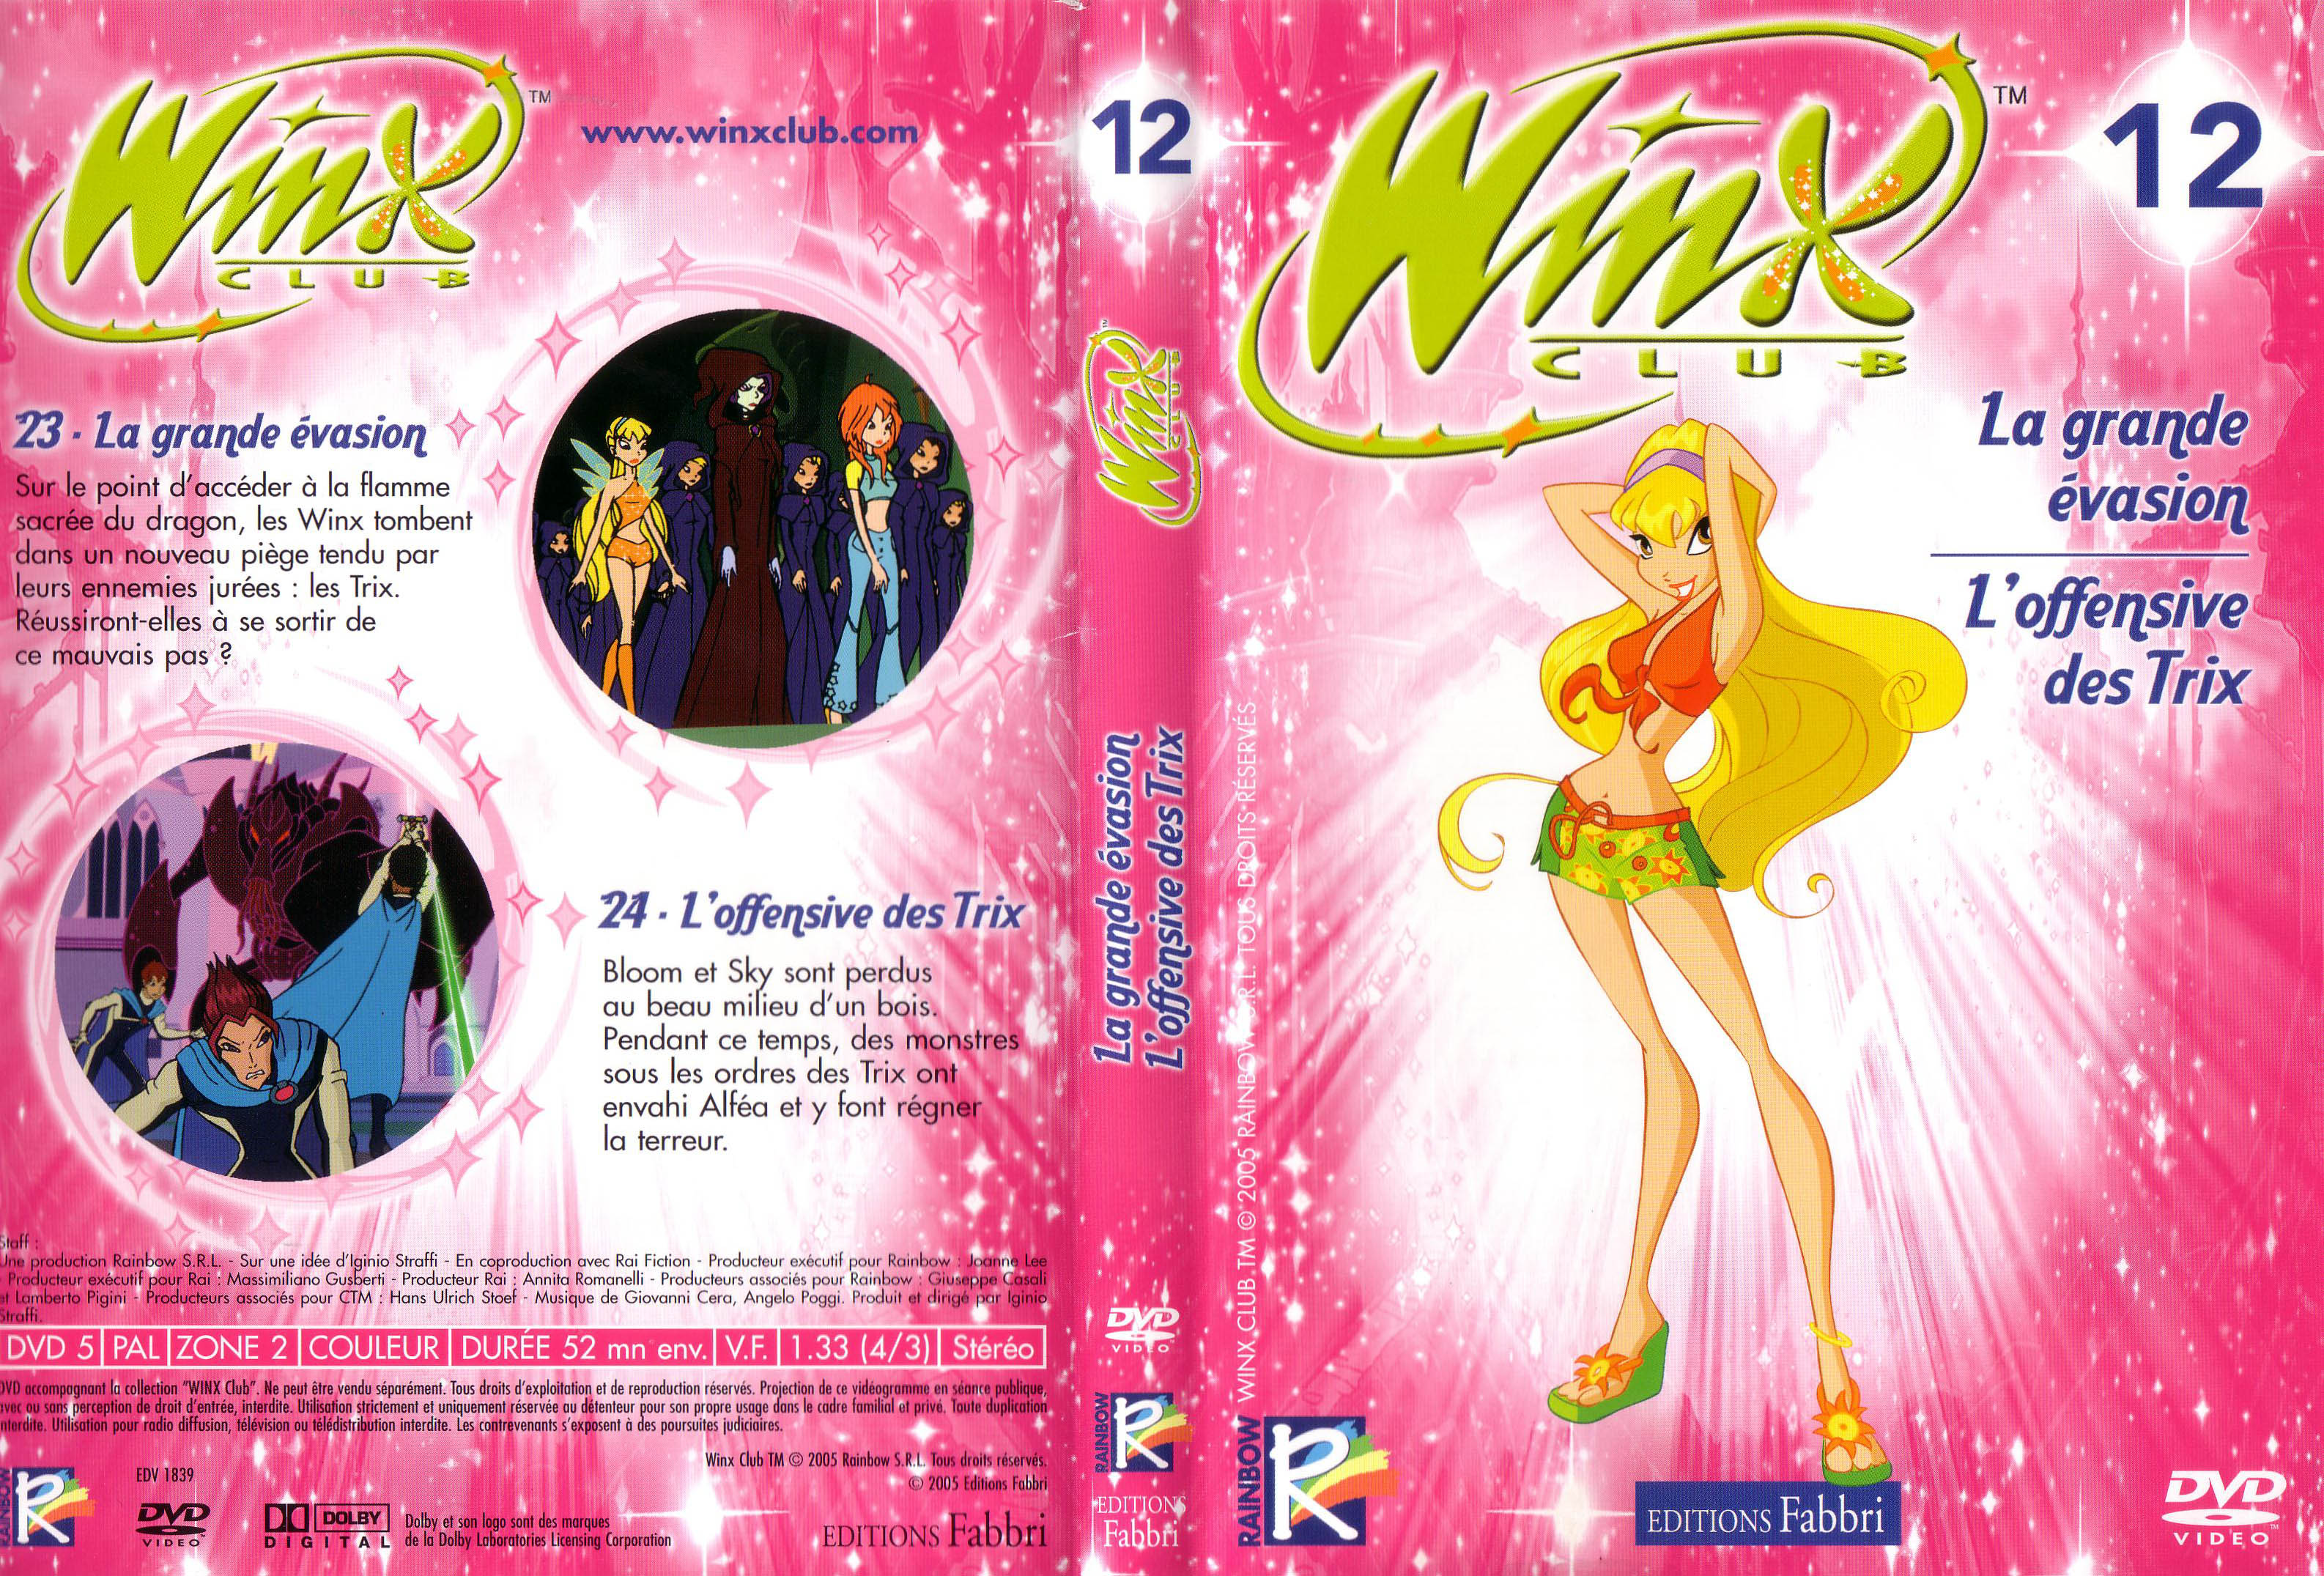 Jaquette DVD Winx Club vol 12